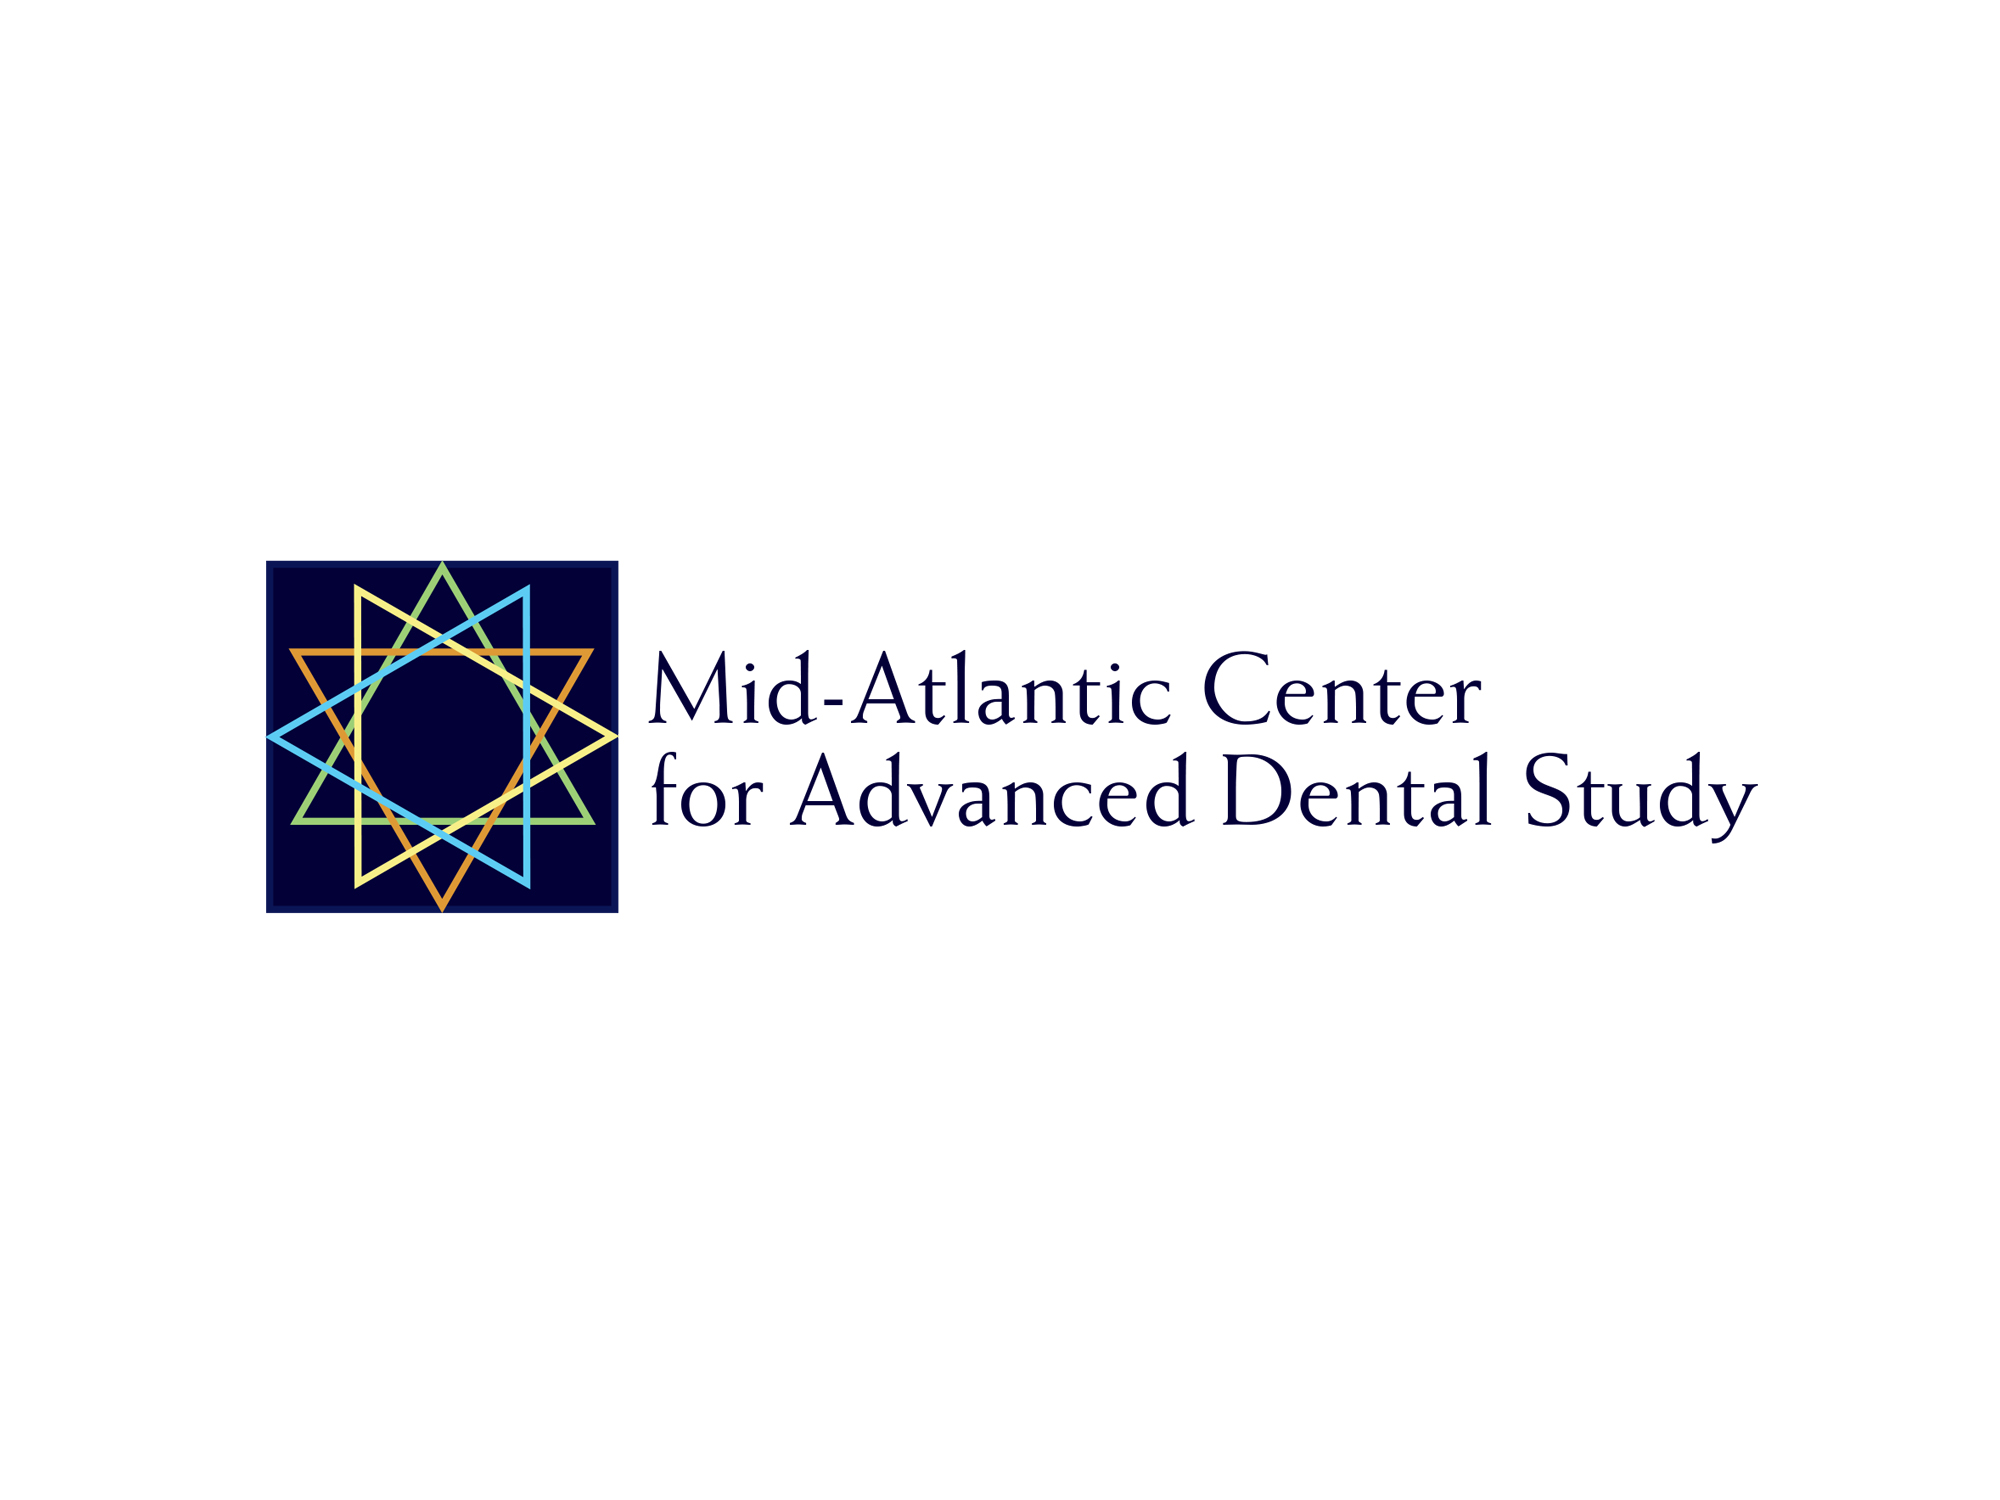 Mid-Atlantic Center for Advanced Dental Study, 2011.